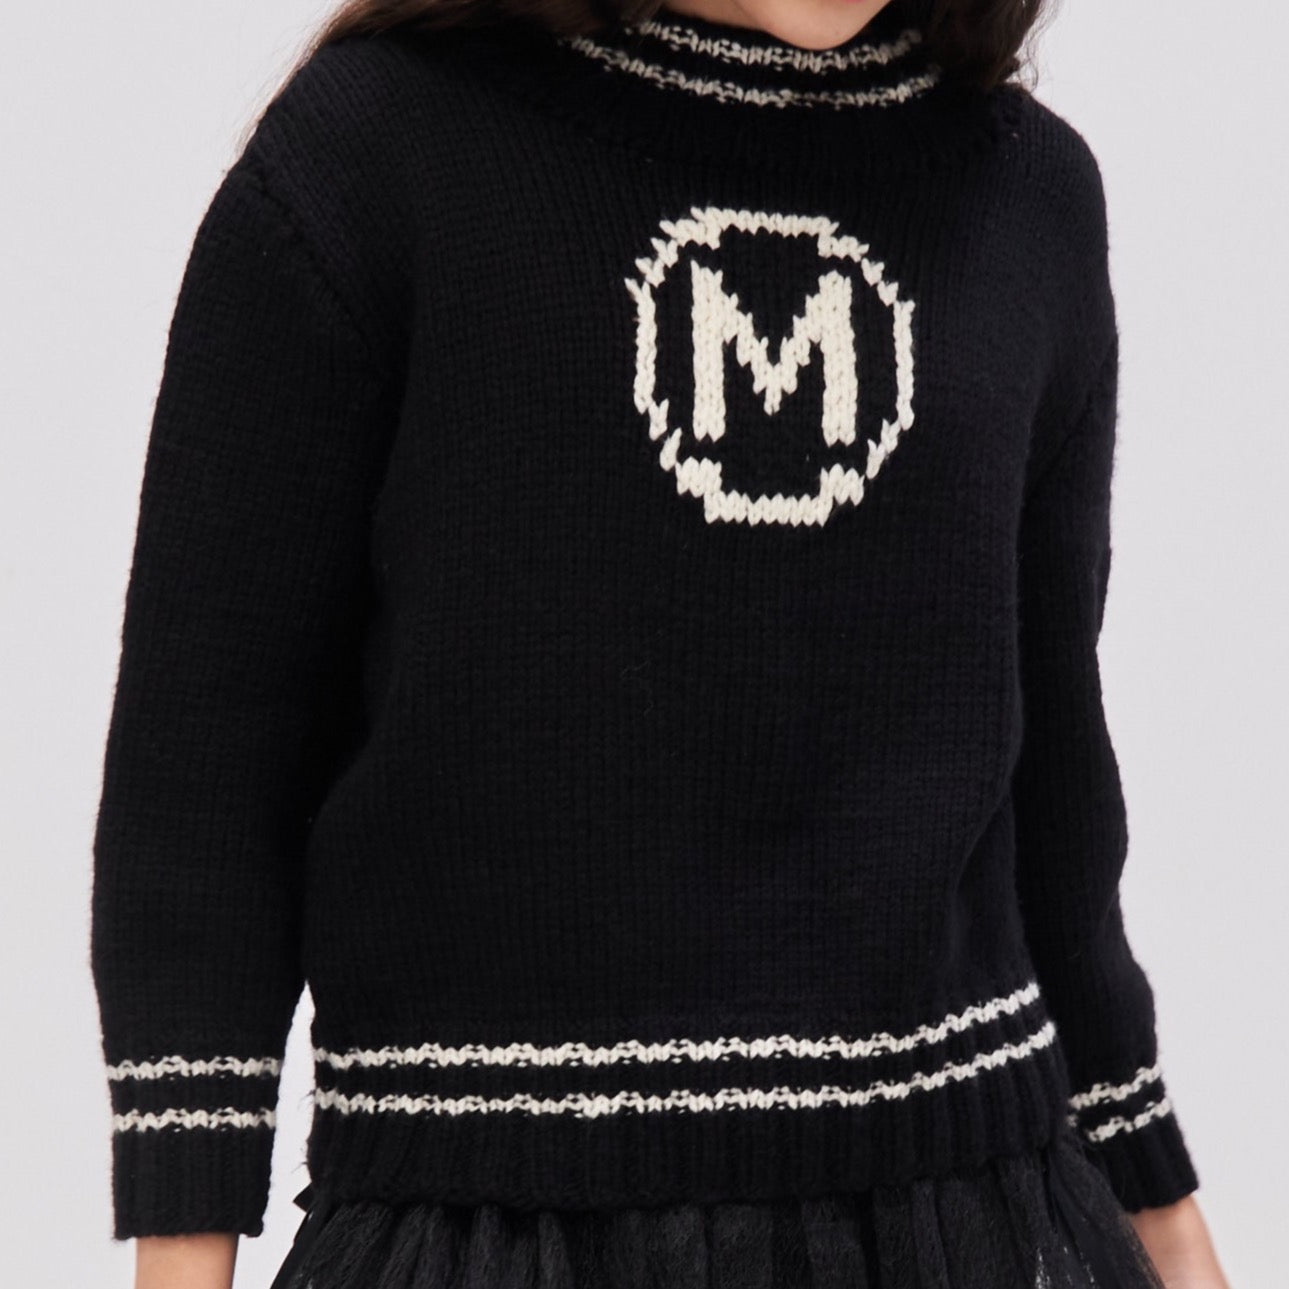 Mon Margin Day Sweater